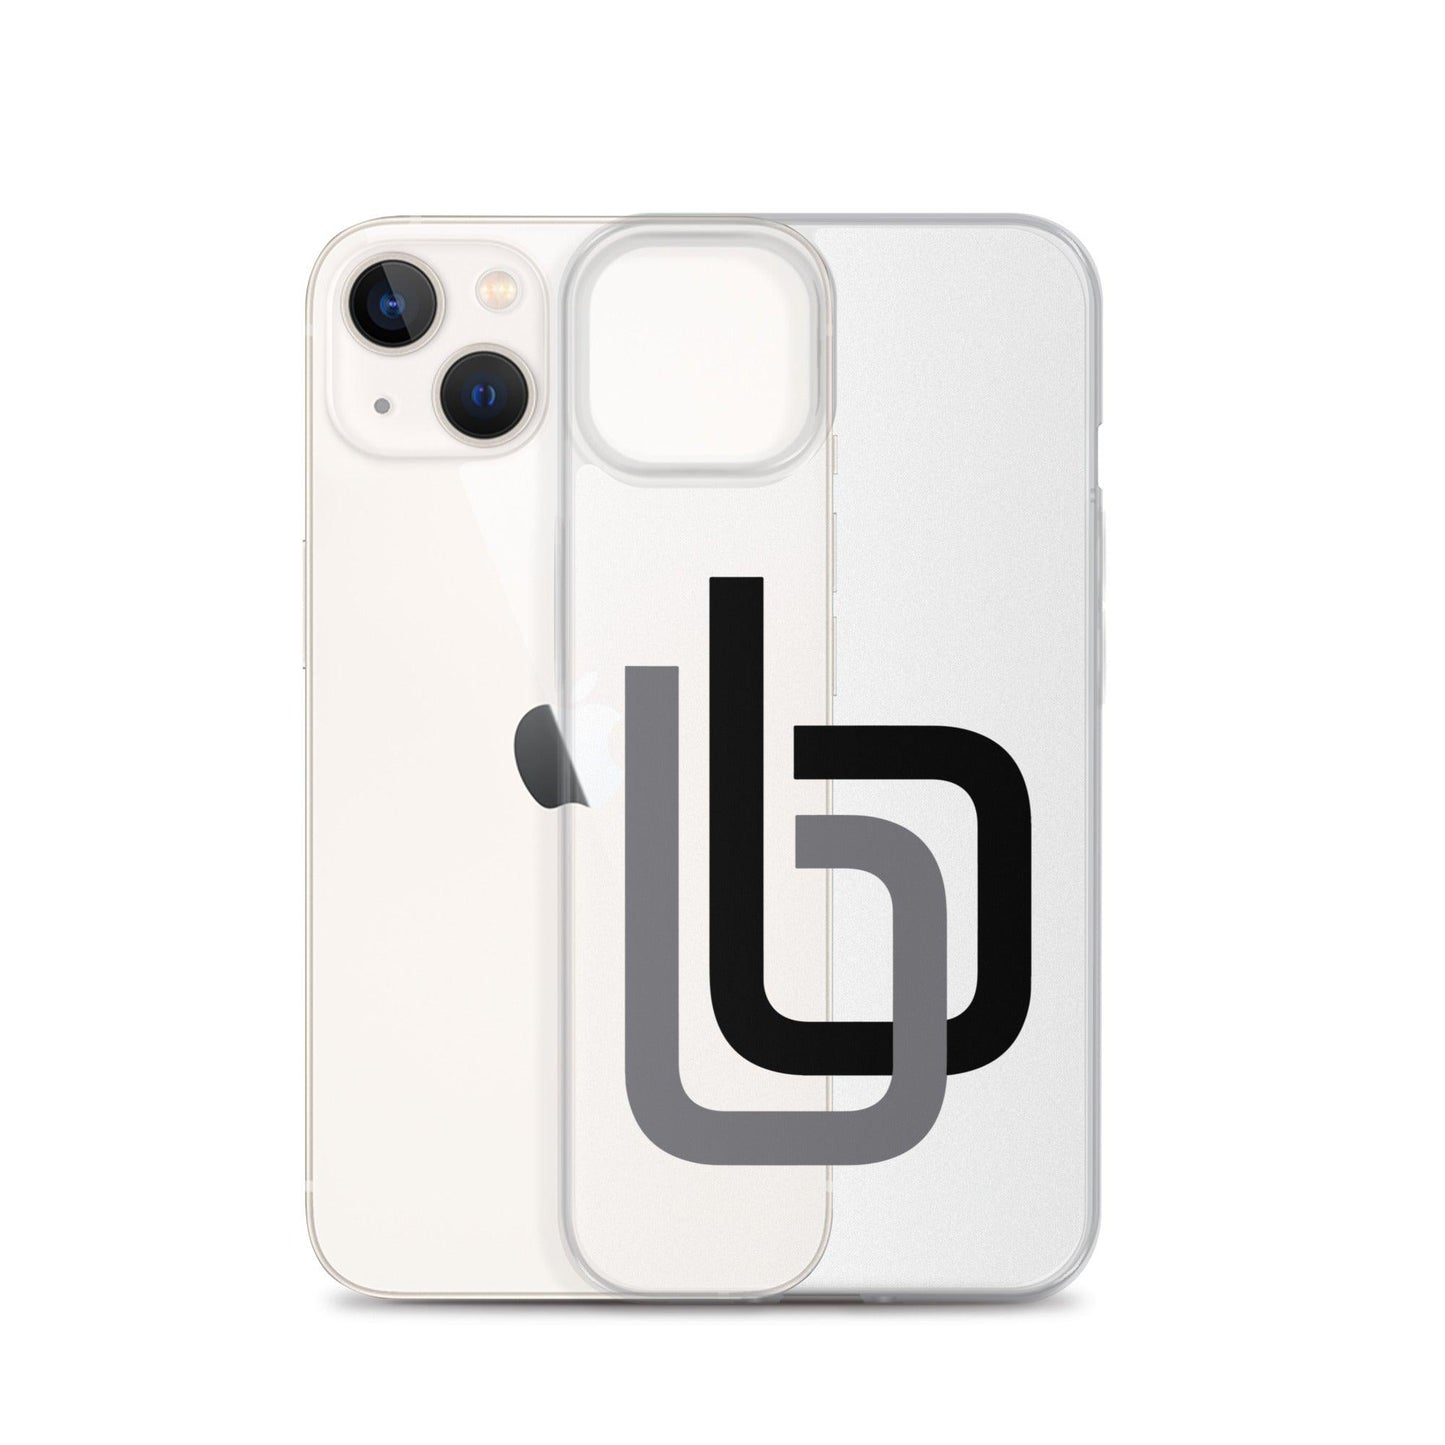 Byron Buxton “bb” iPhone Case - Fan Arch